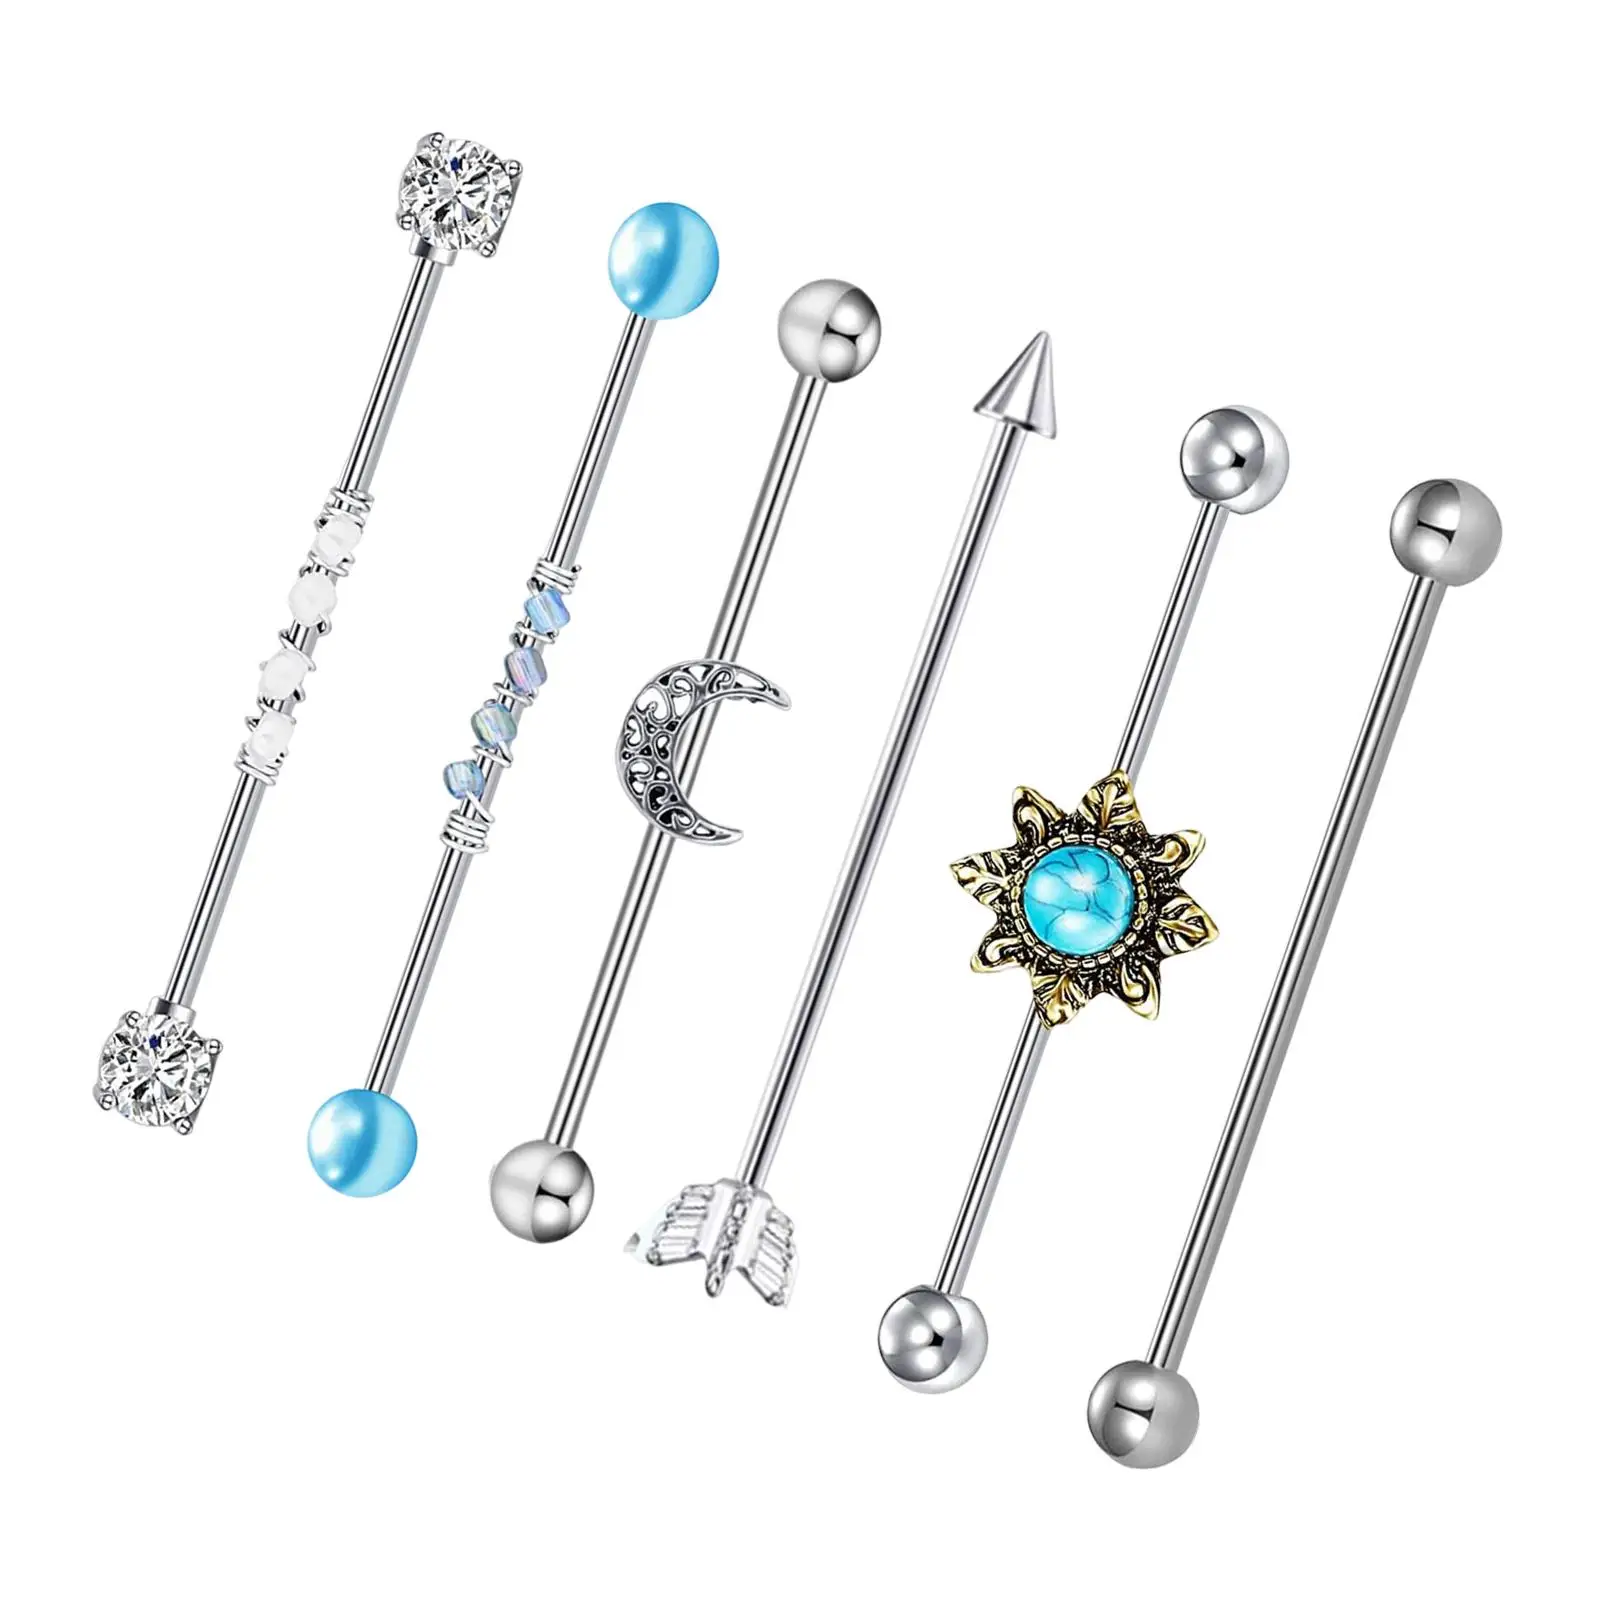 6Pcs Industrial Barbell Earrings Cartilage Body Piercing Jewelry Statement 38mm 1 1/2inch 14G Industrial Piercing Bar for Women